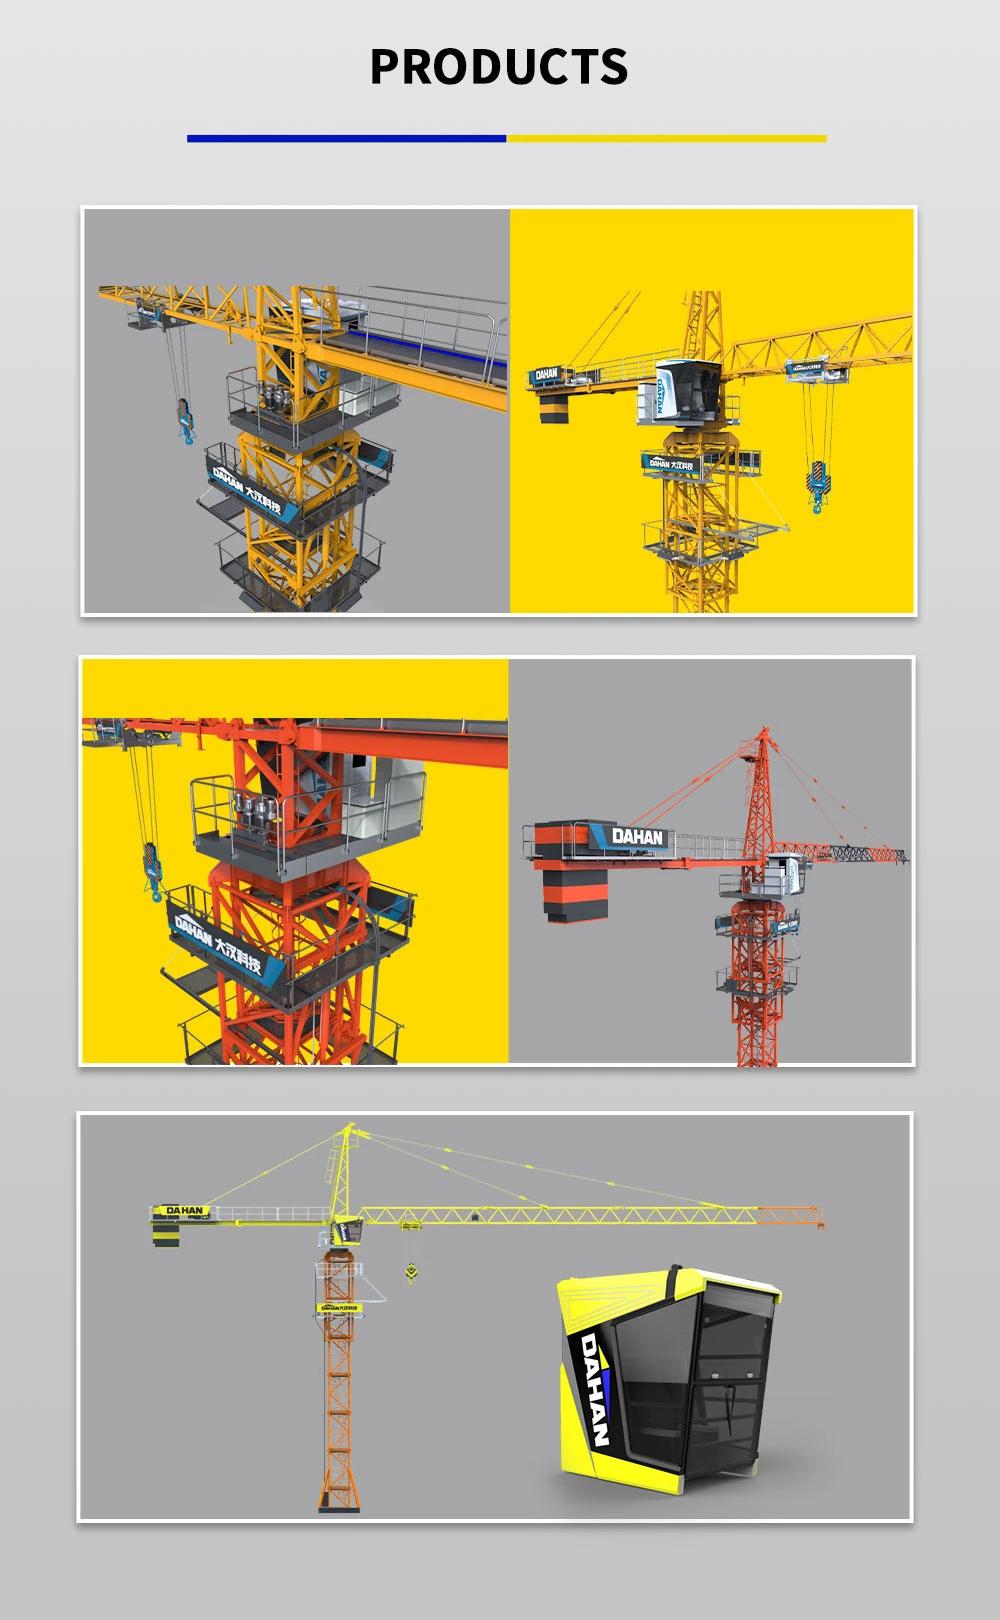 Construction Topkit Qtz125 Tc6024 H3/36b Tower Crane